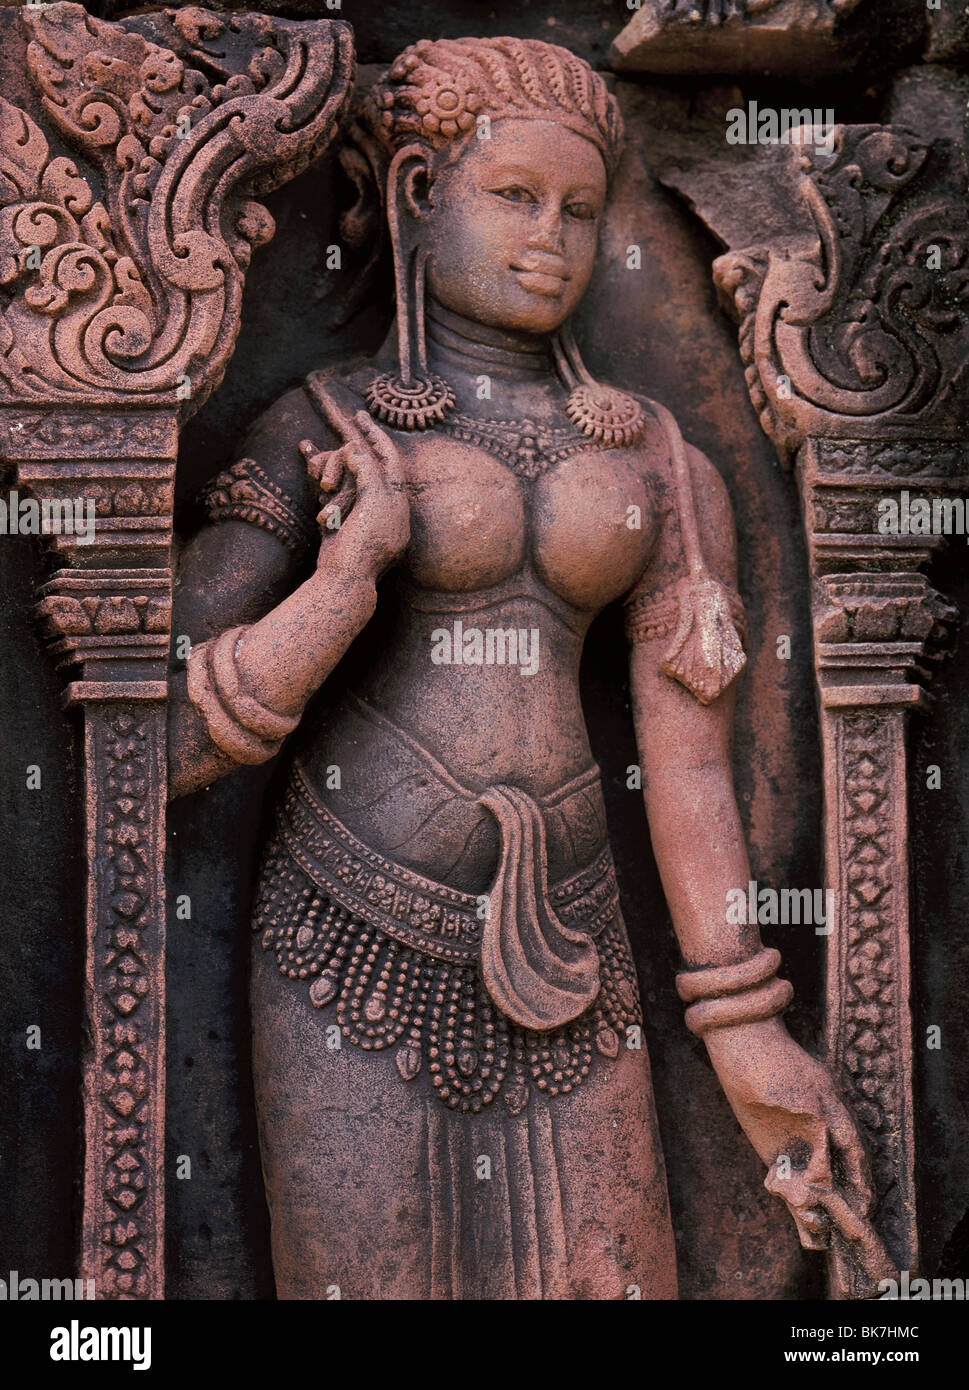 Weibliche Gottheit Tür Wächter aus dem 10. Jahrhundert, Banteay Srei, Kambodscha, Angkor, UNESCO-Weltkulturerbe Stockfoto